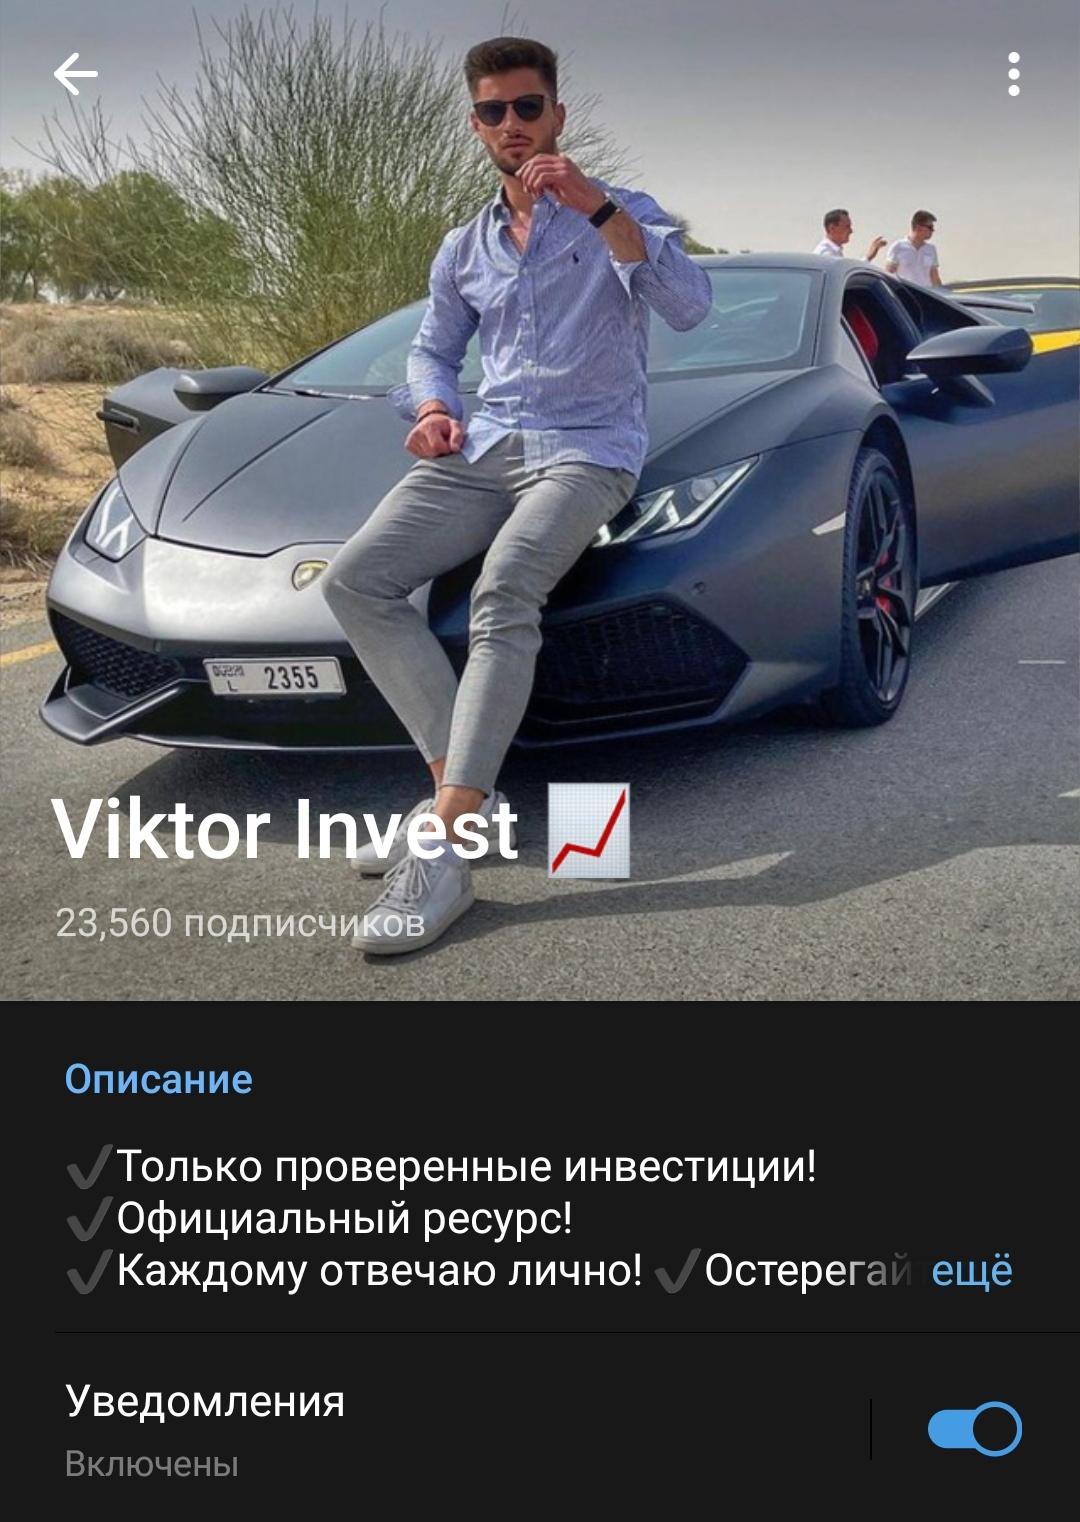 Viktor Invest Club телеграмм